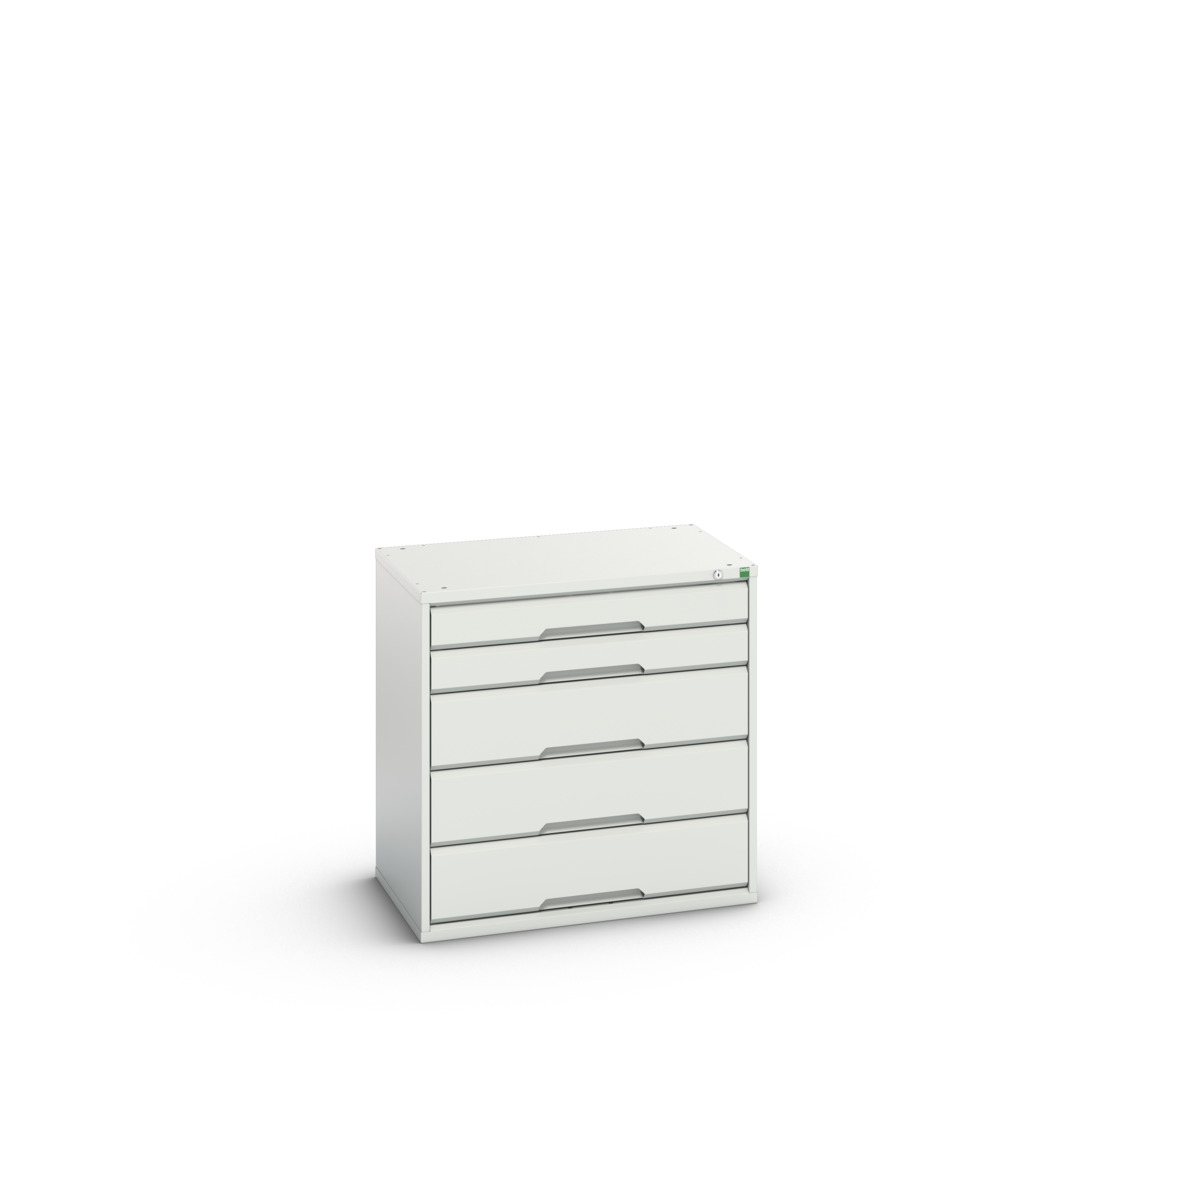 16925112.16 - verso drawer cabinet